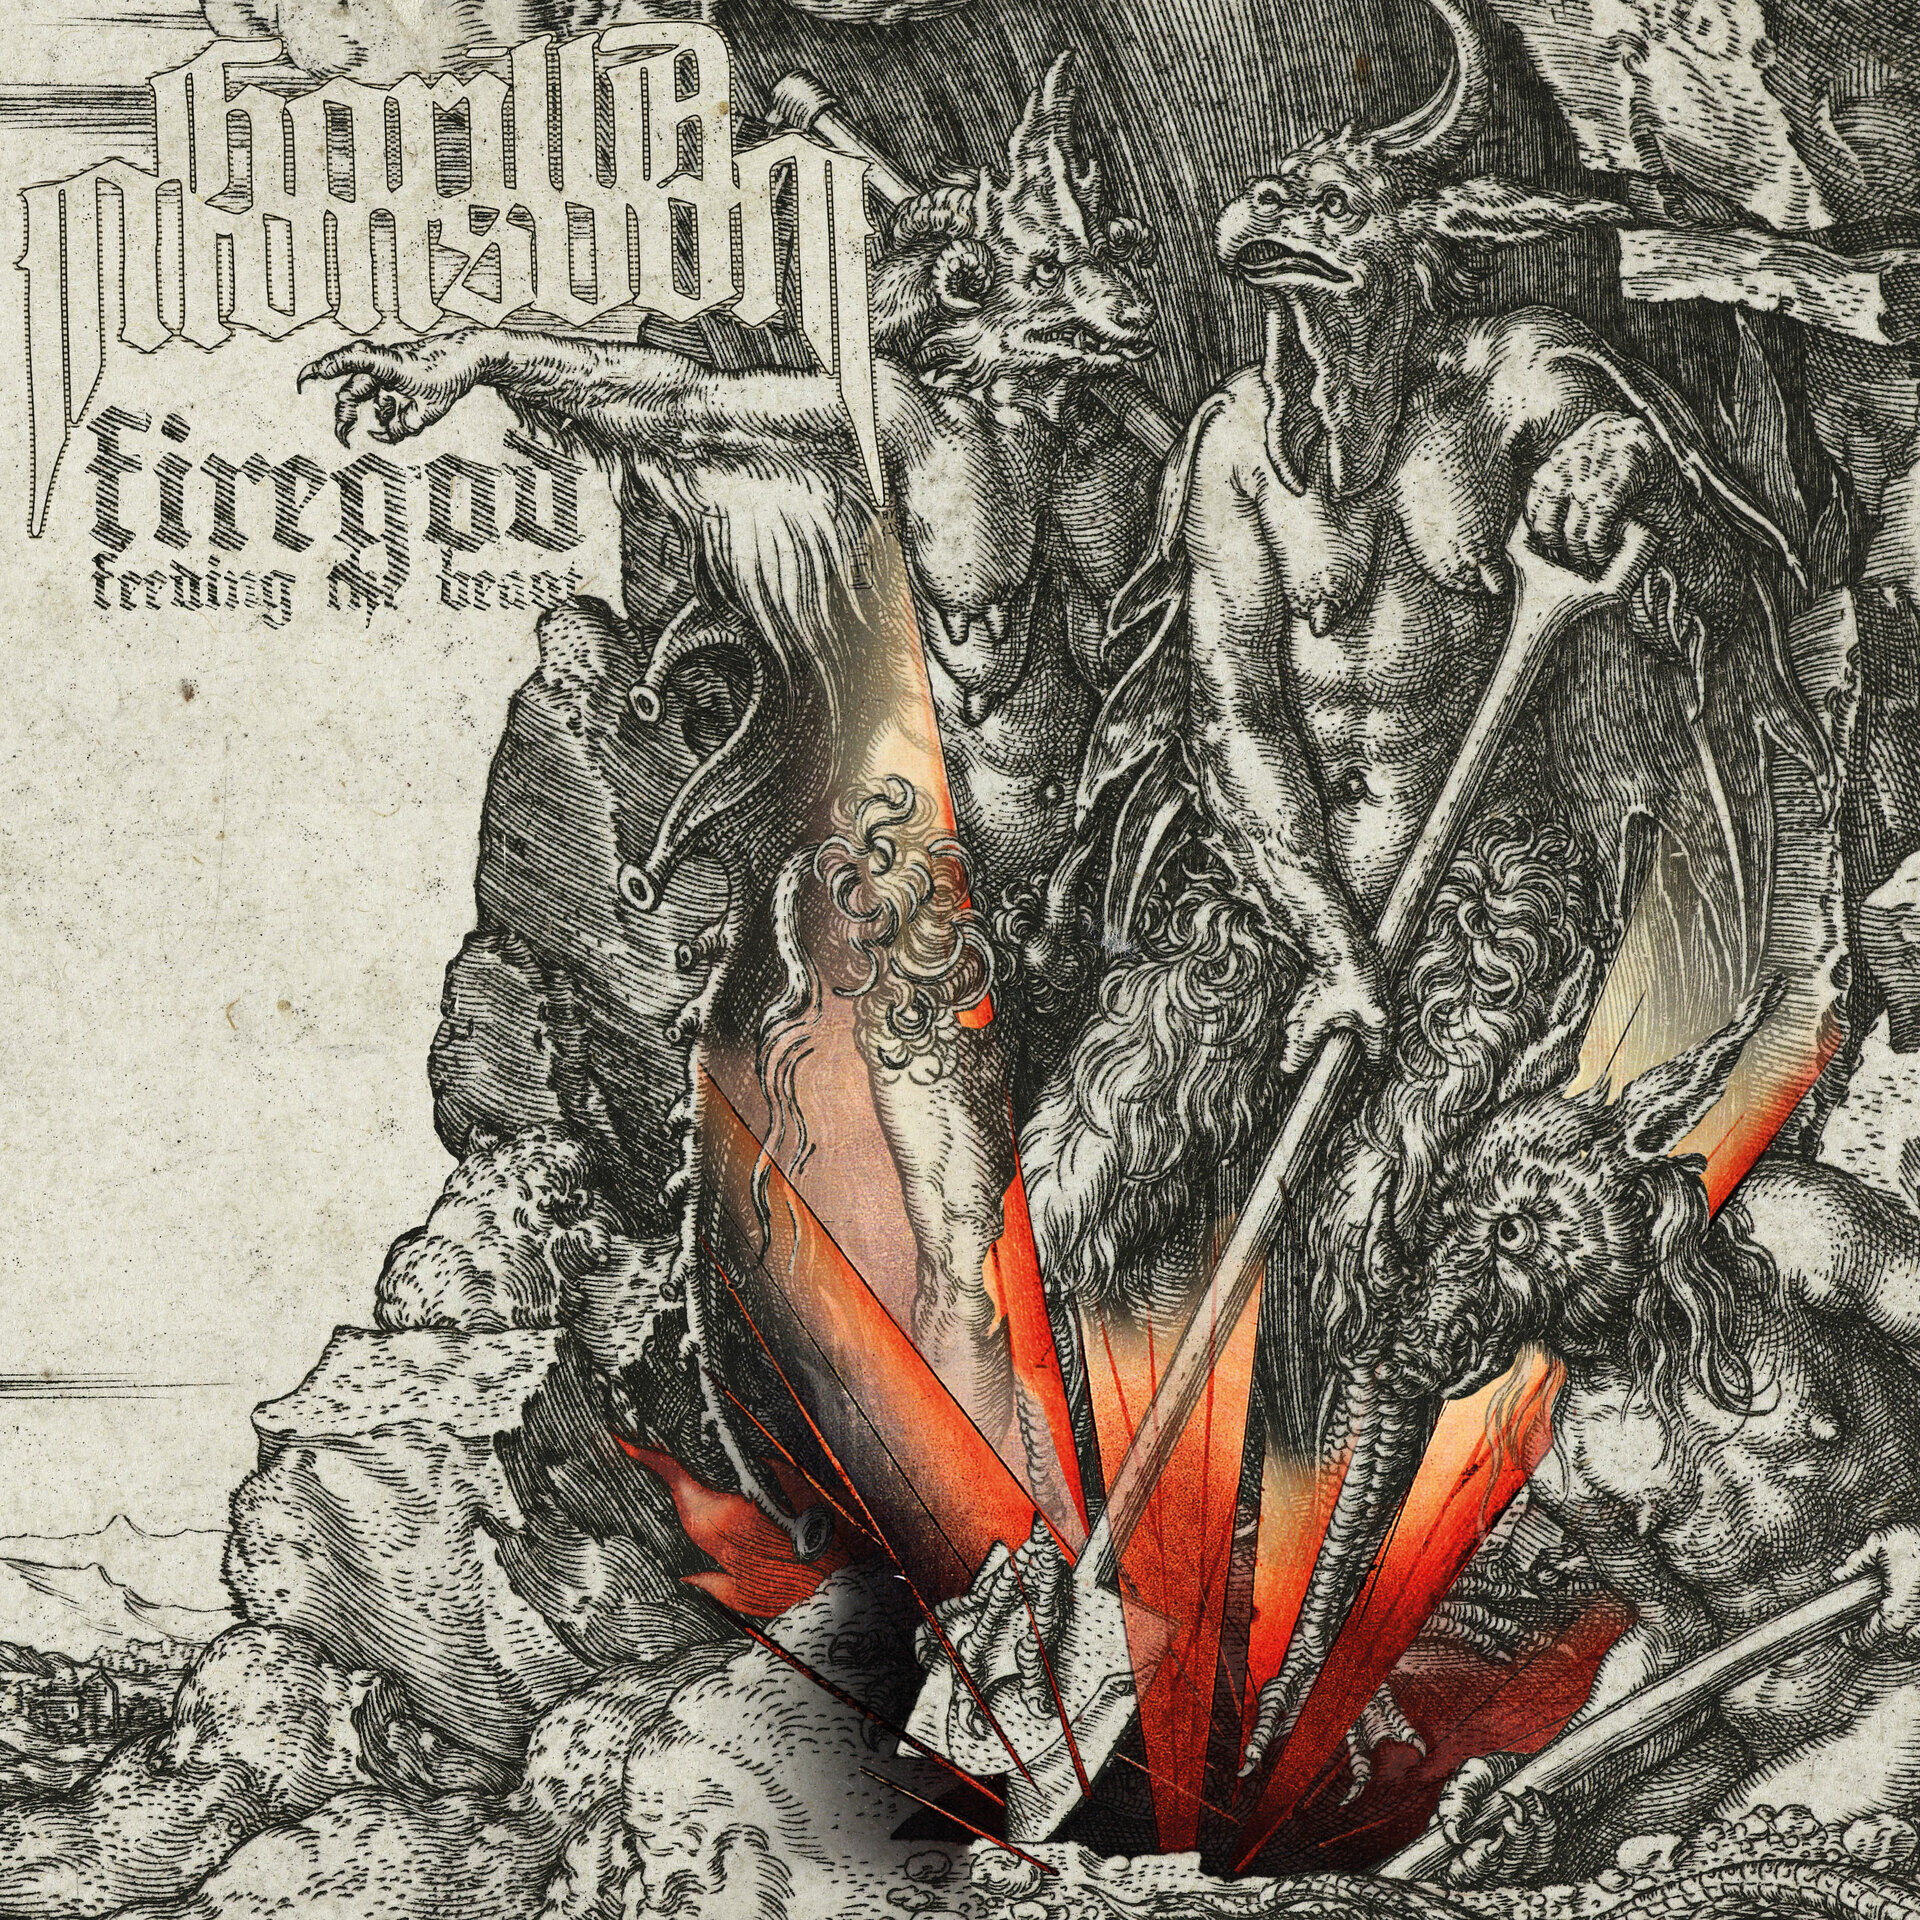 GORILLA MONSOON - Firegod - Feeding The Beast [BLACK LP]